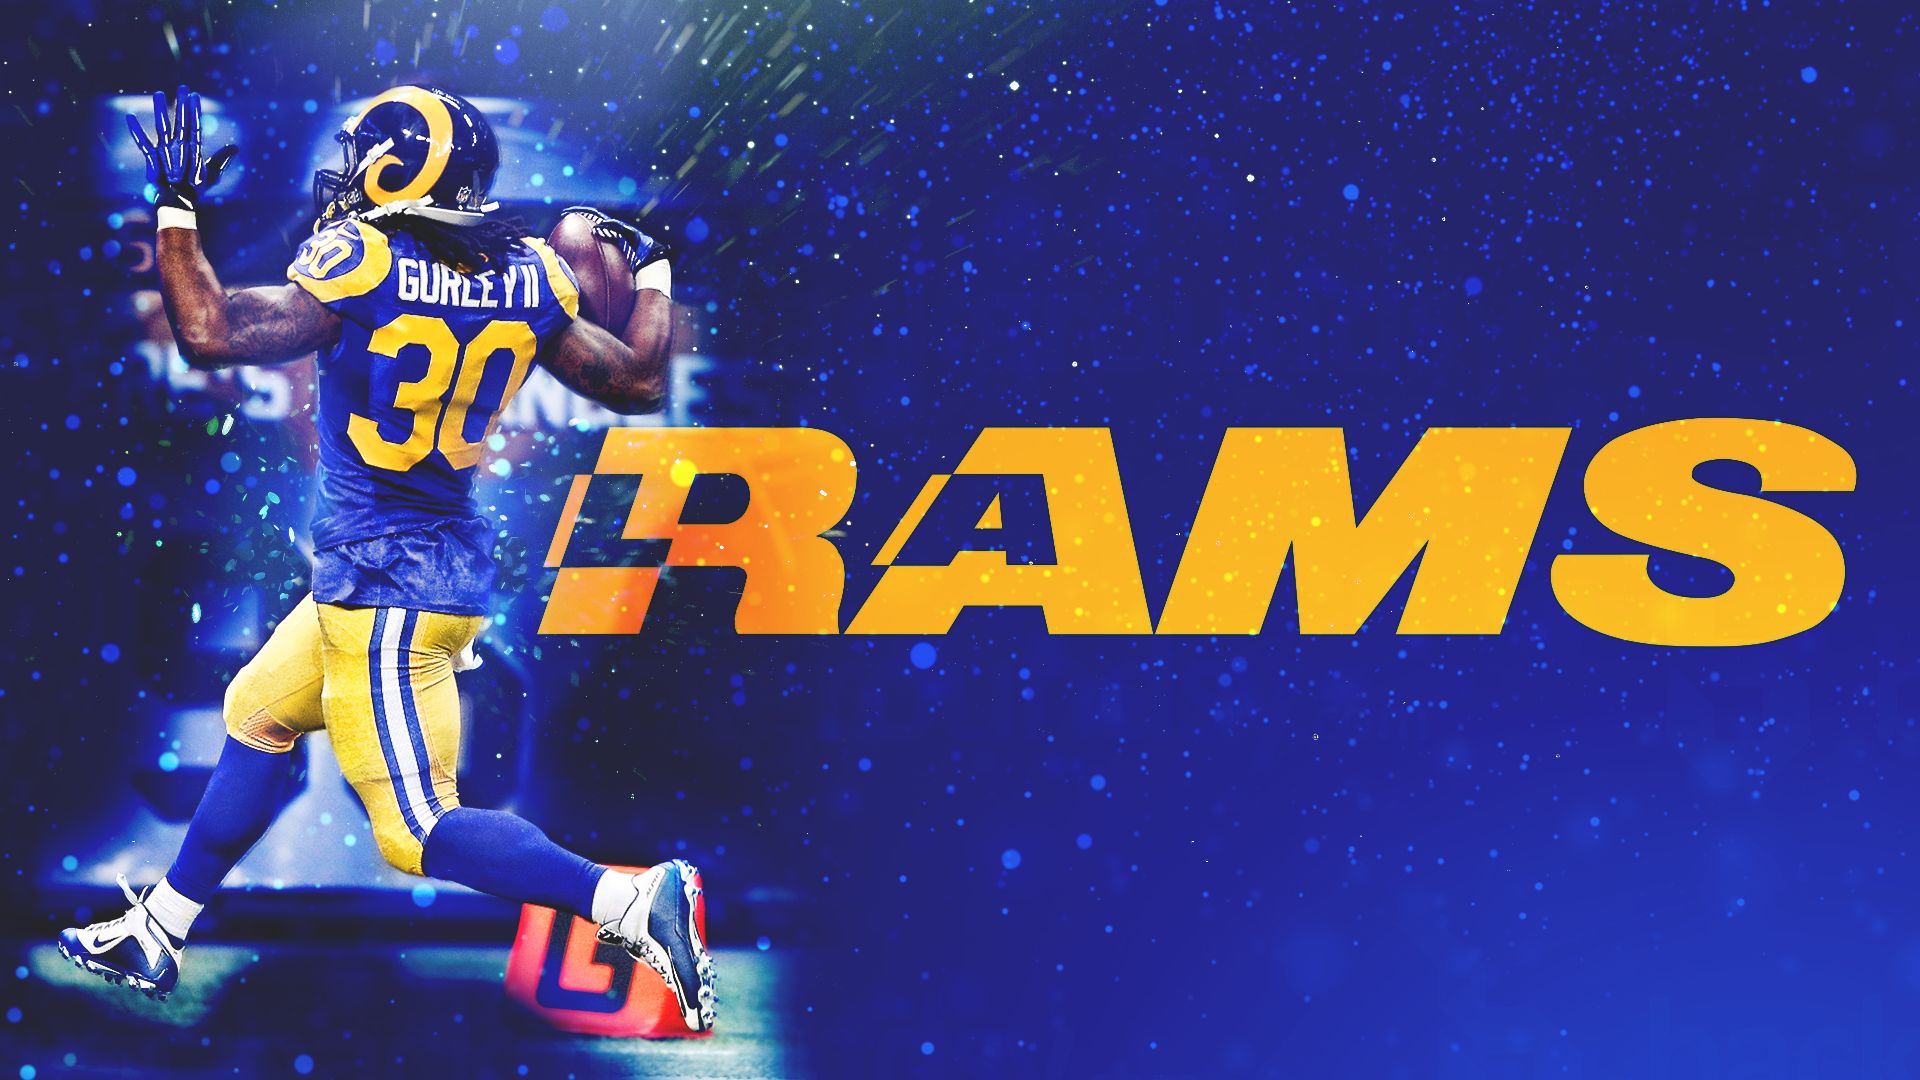 Los Angeles Rams wallpapers for desktop, download free Los Angeles